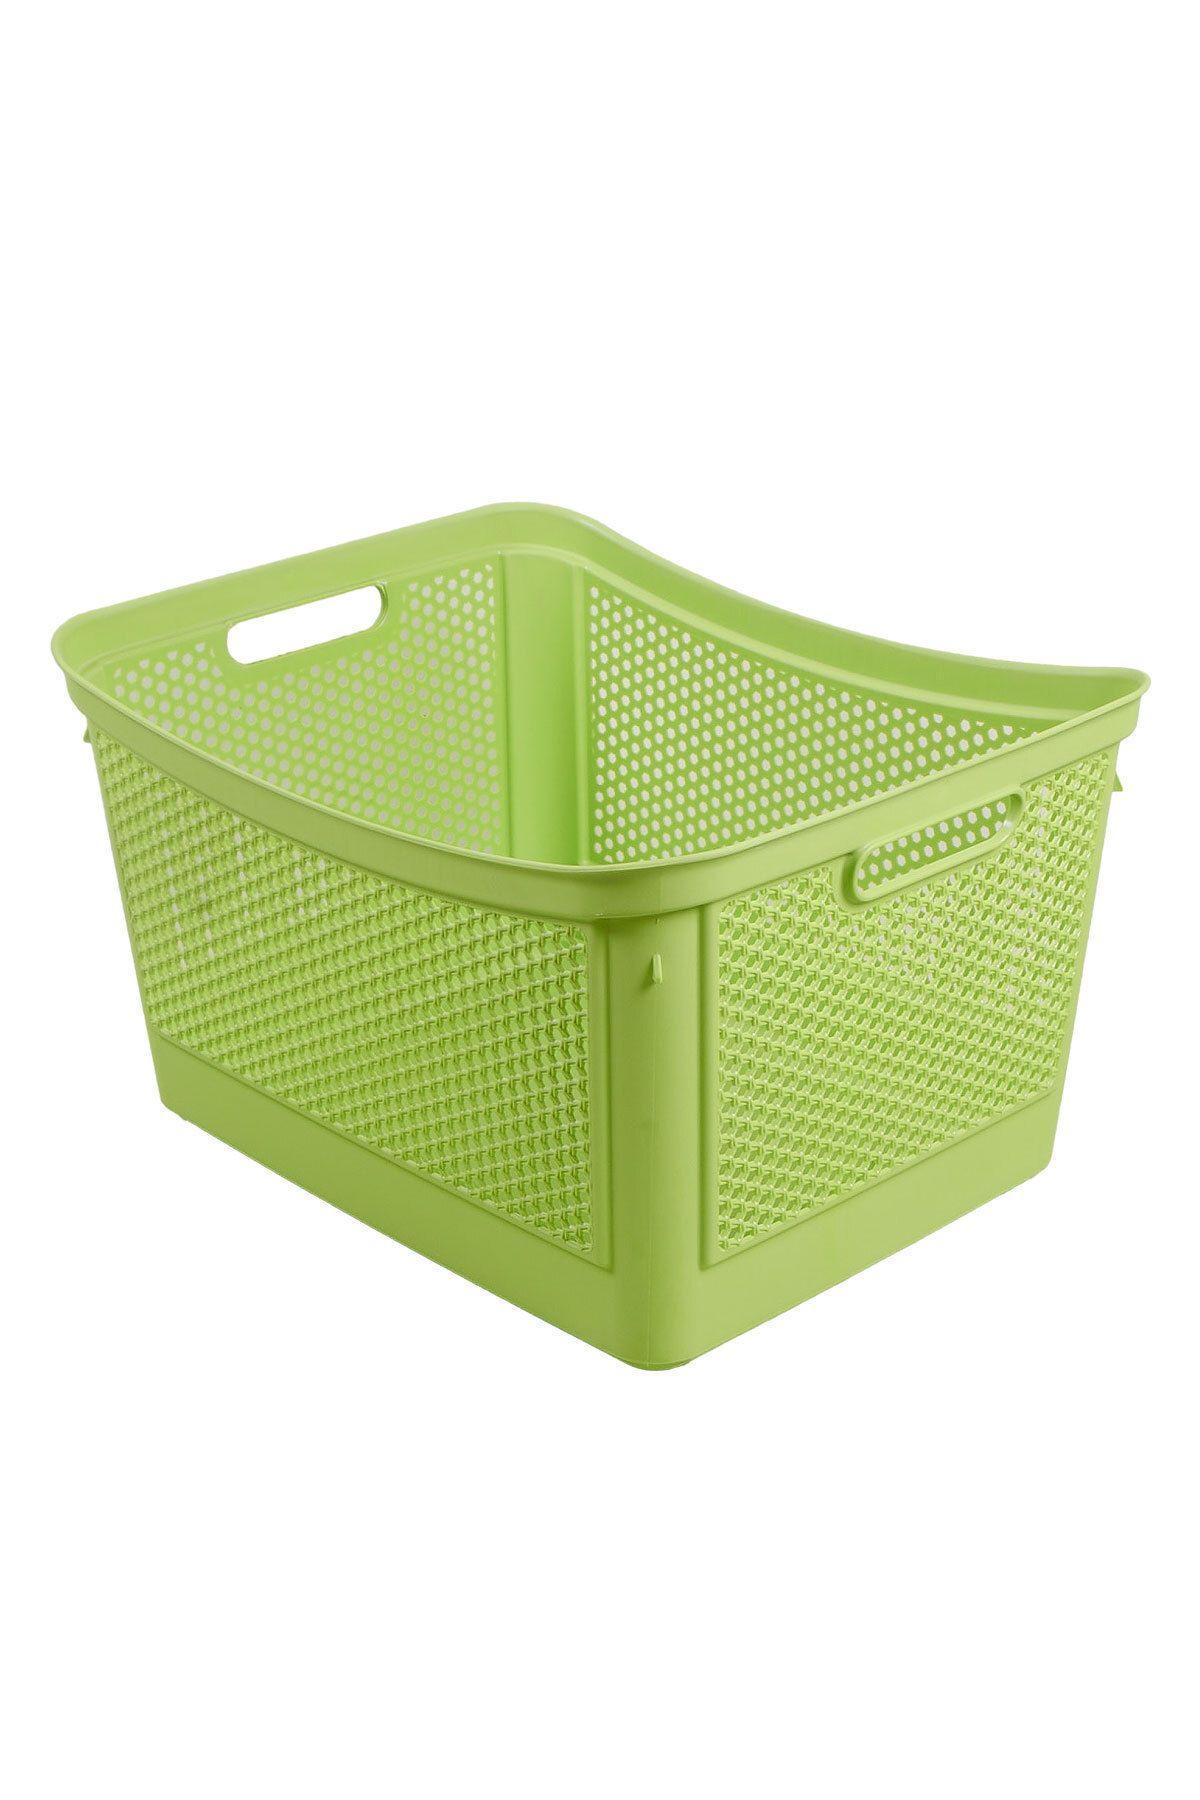 QUTU Q-basket elegance green-38 L